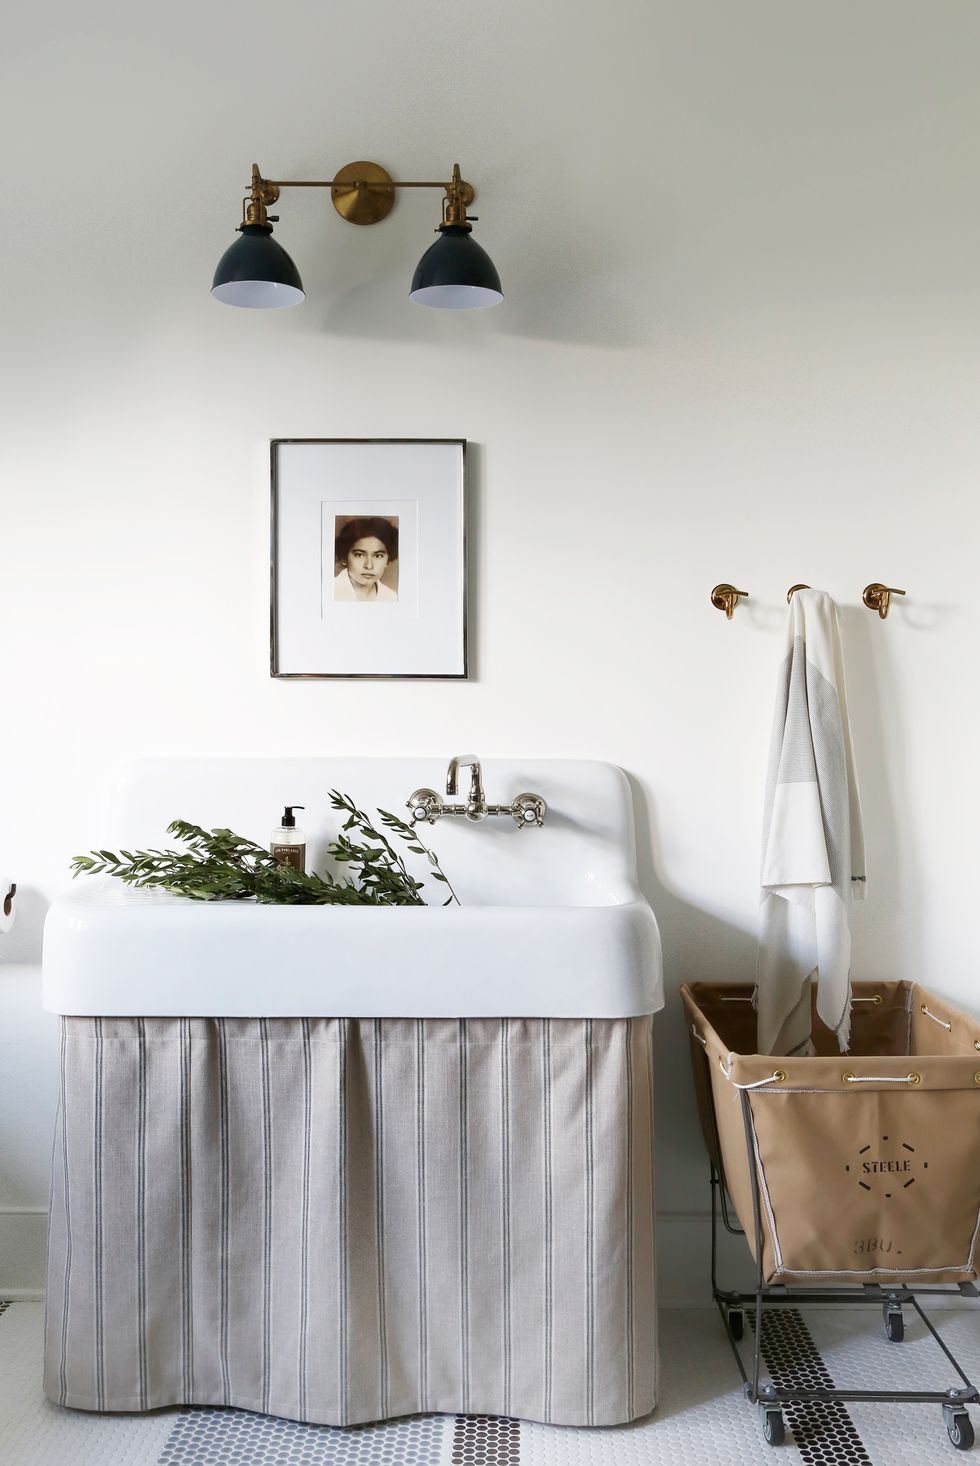 50 Modern Small Laundry Room Ideas and Photos